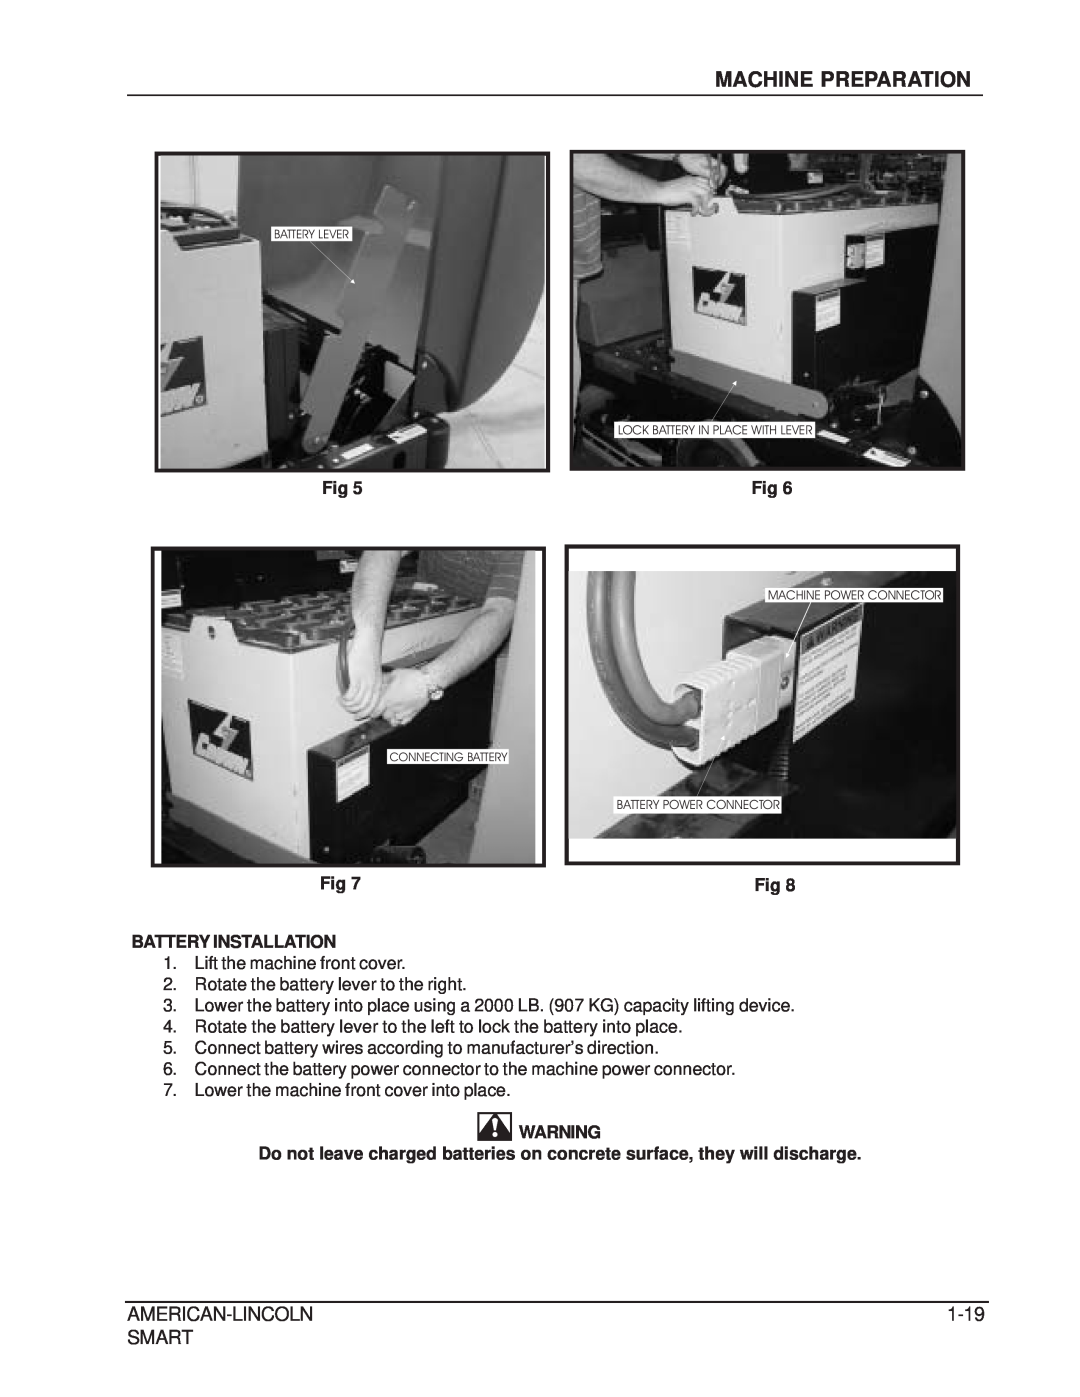 Nilfisk-ALTO 692003 manual Machine Preparation, American-Lincoln, 1-19, Smart, Battery Installation 